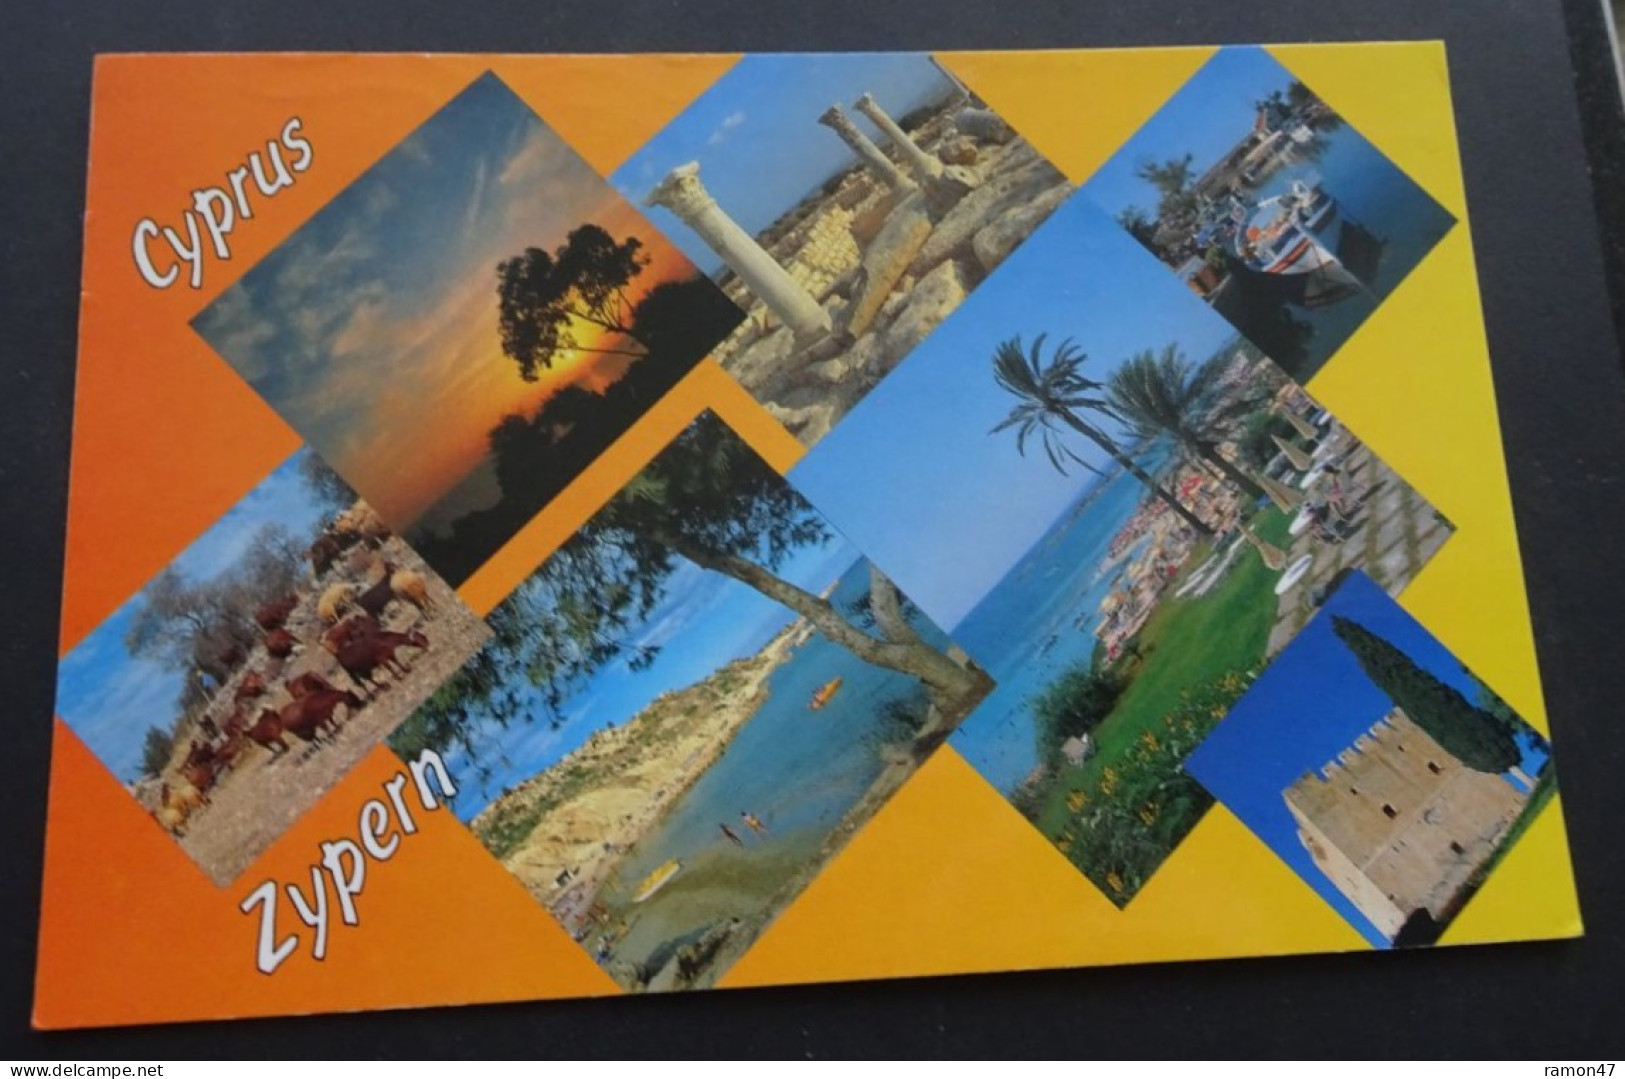 Cyprus - Aphrodite's Island - Kyriakou Bookshops, Cyprus - Sunshine Cards - # A-1058 - Cyprus